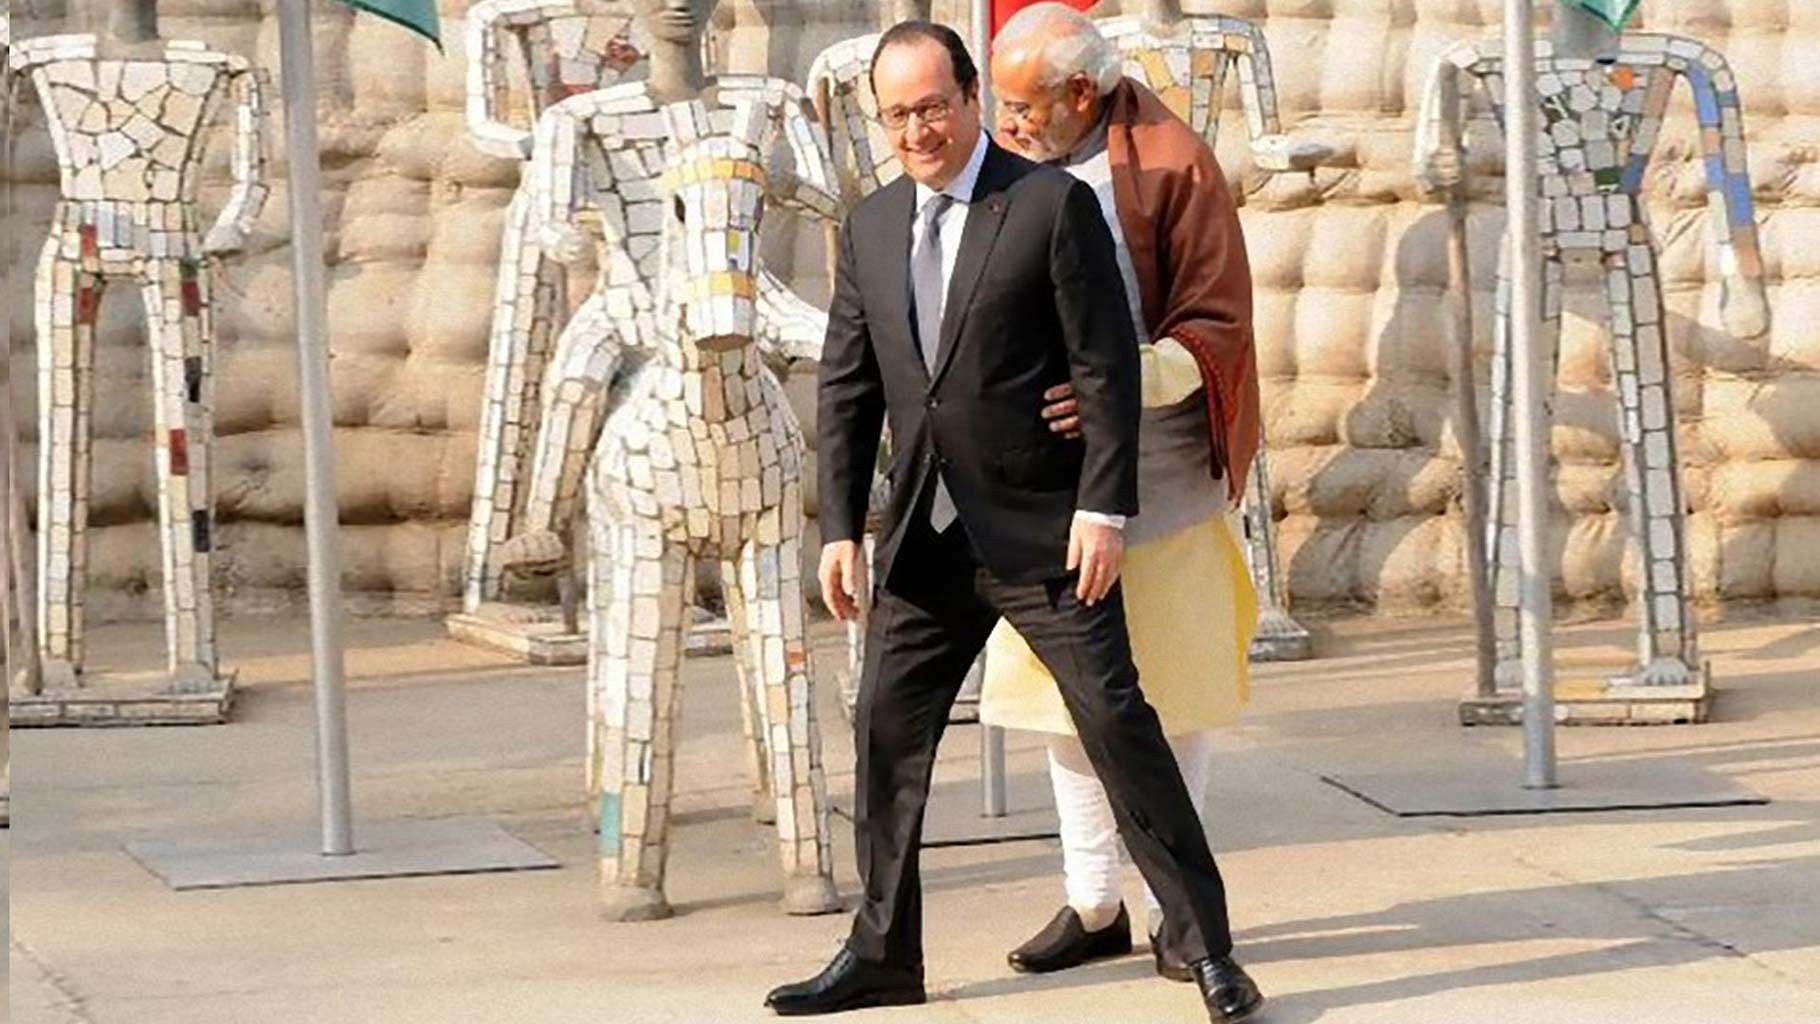 The awkward ‘hug’. (Photo Courtesy: <i><a href="http://www.gqindia.com/get-smart/personalities/narendra-modi-just-wants-a-hug/">GQ India</a></i>)